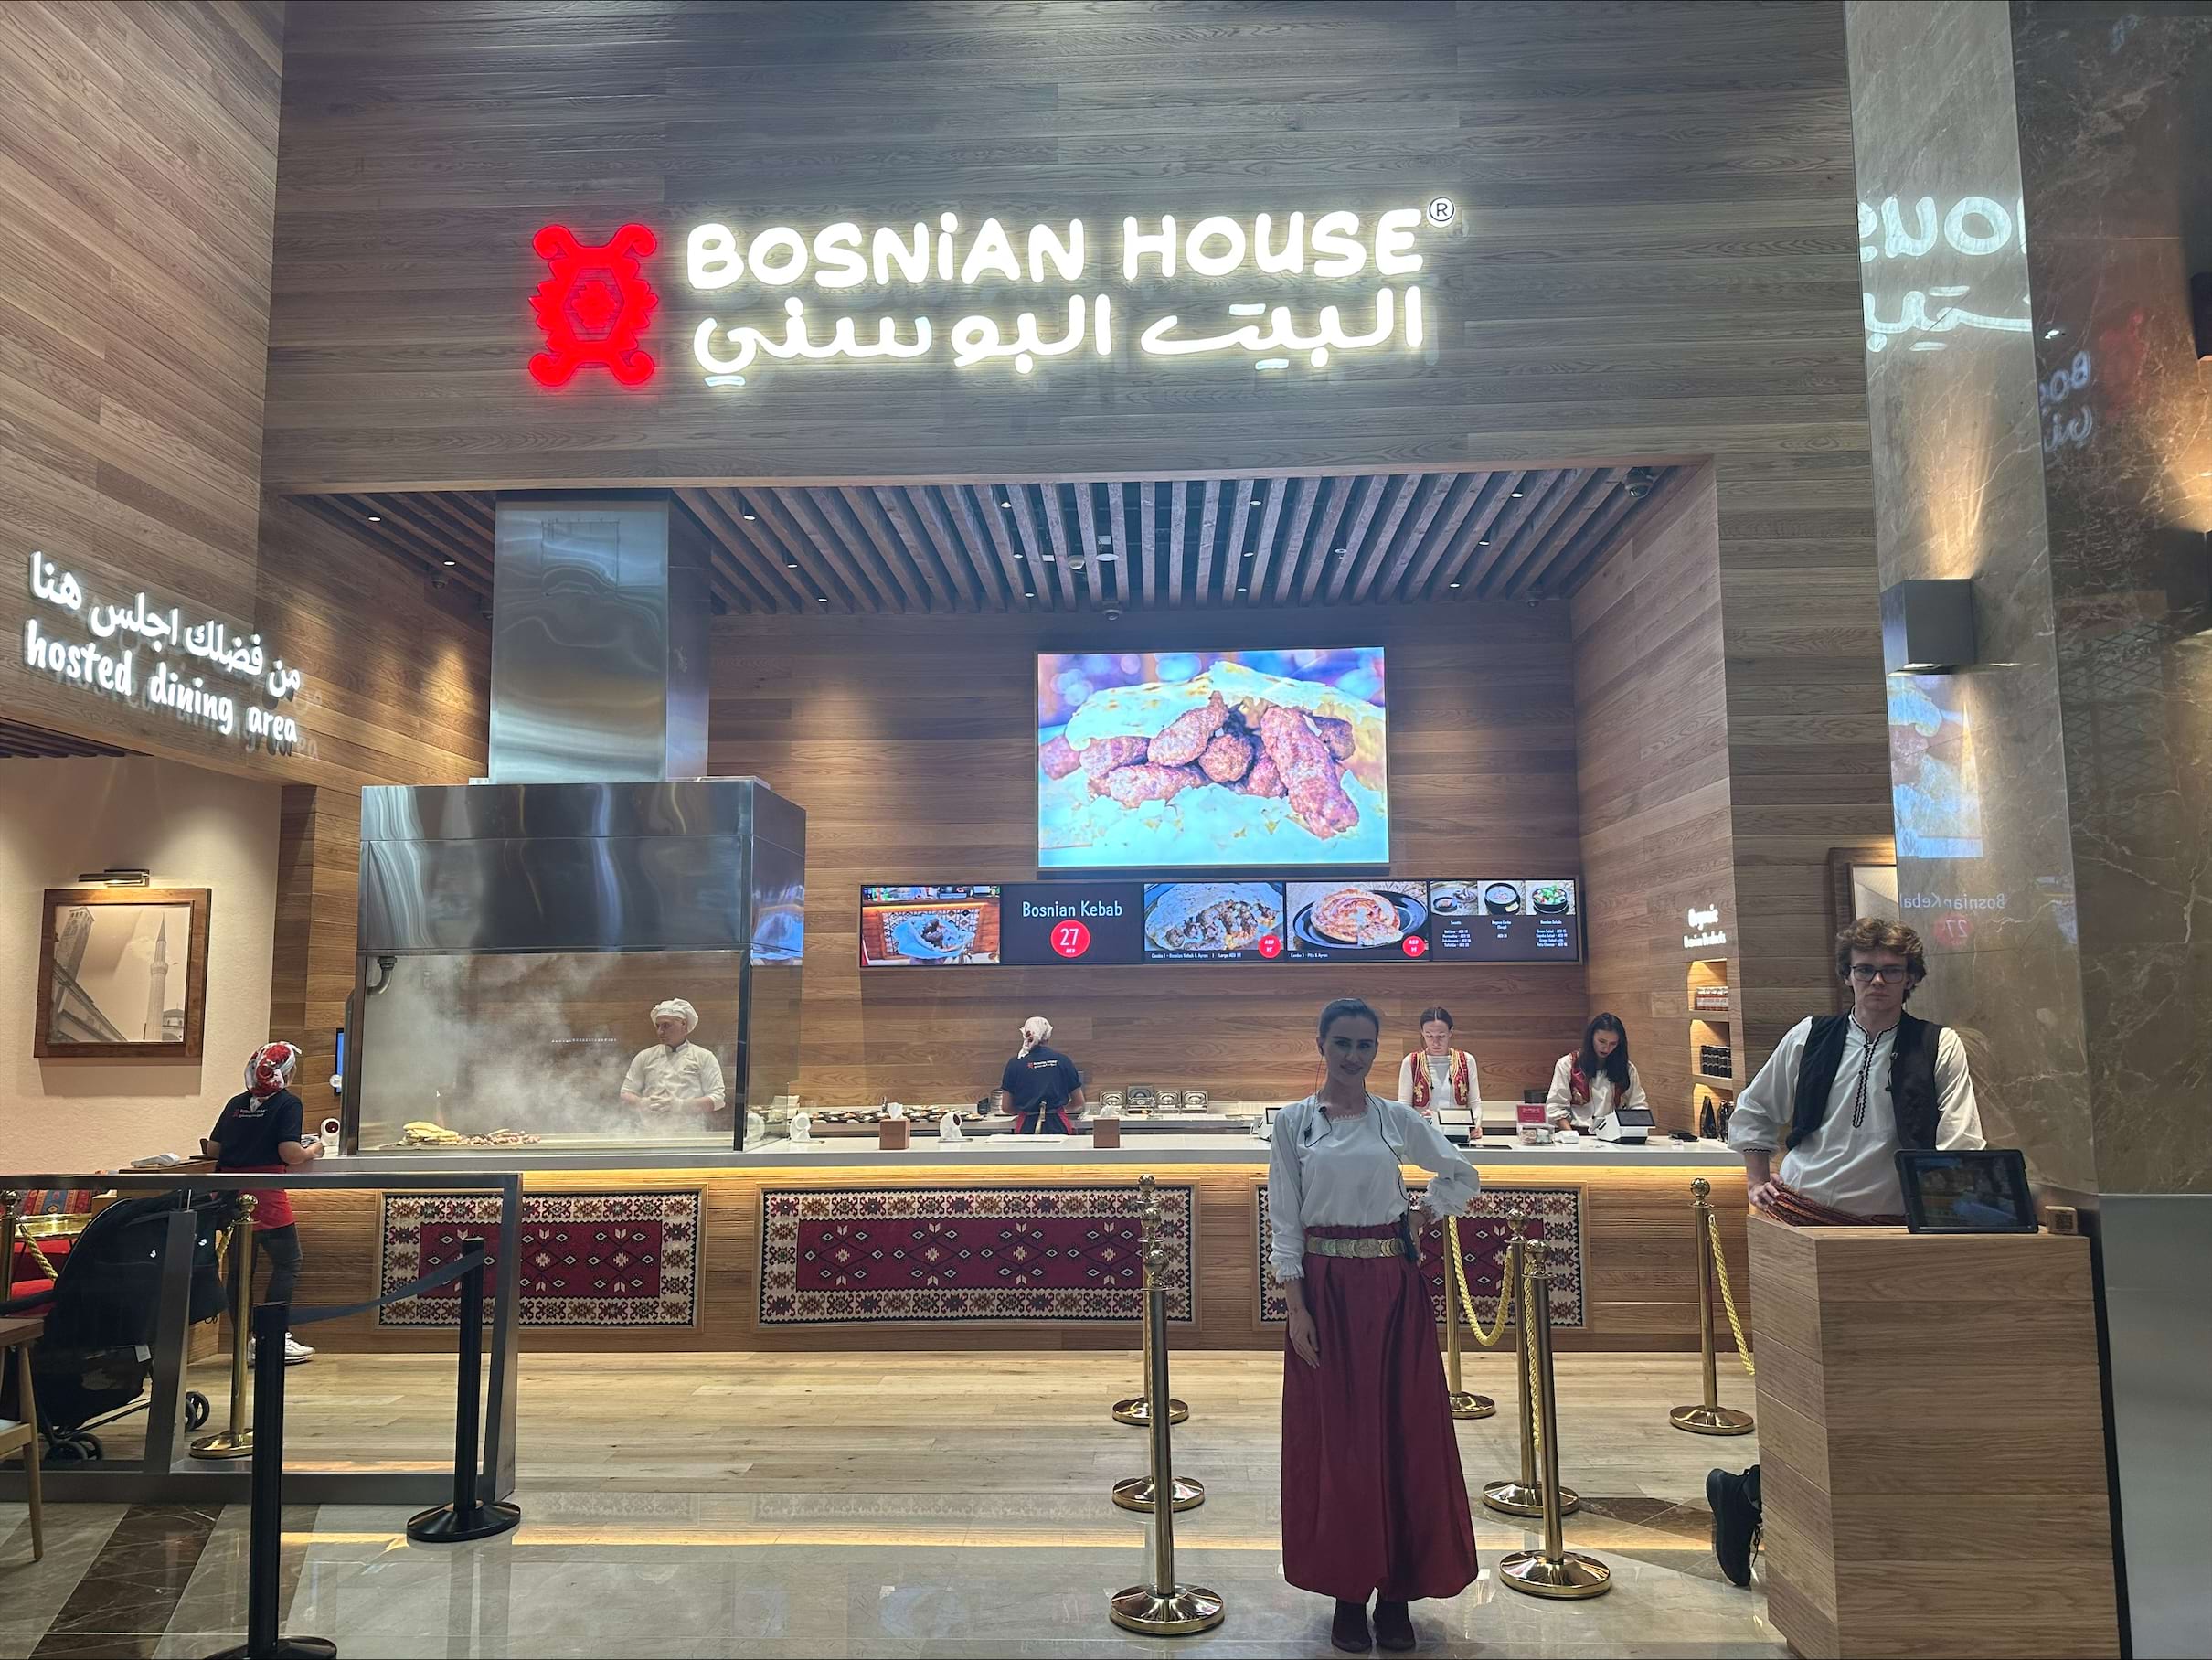 Bosnian House Dubai Mall